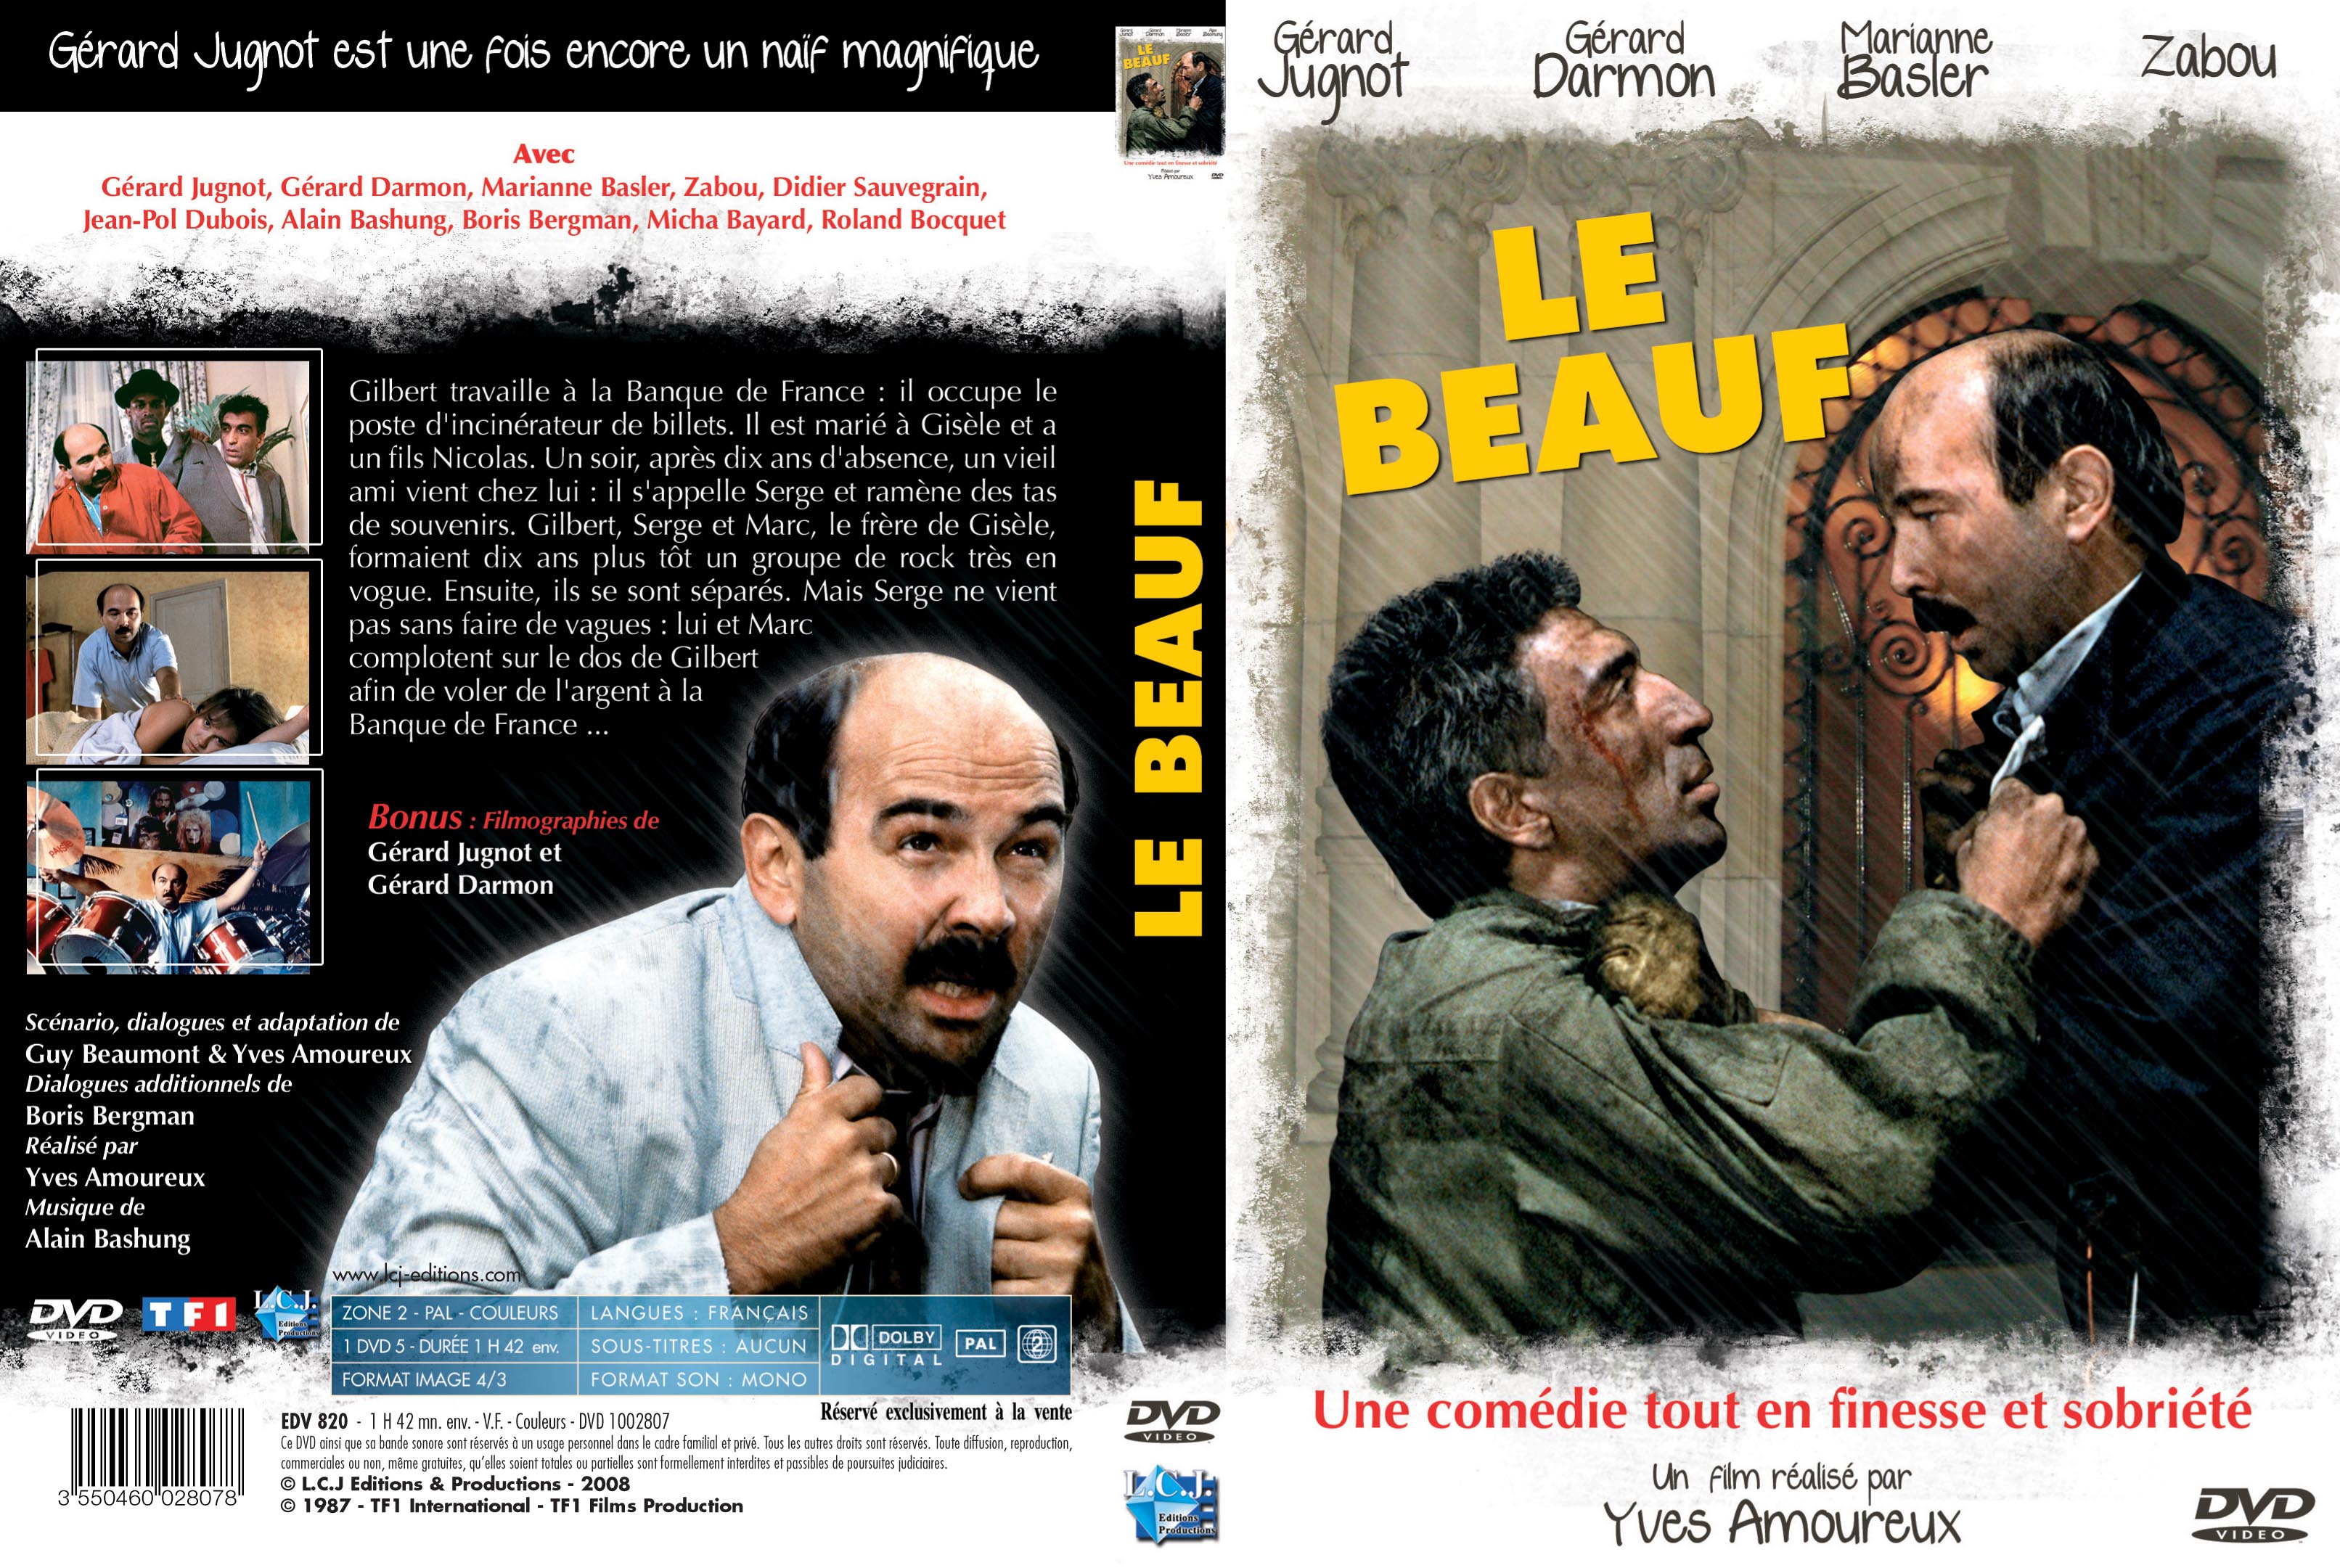 Jaquette DVD Le Beauf custom v2